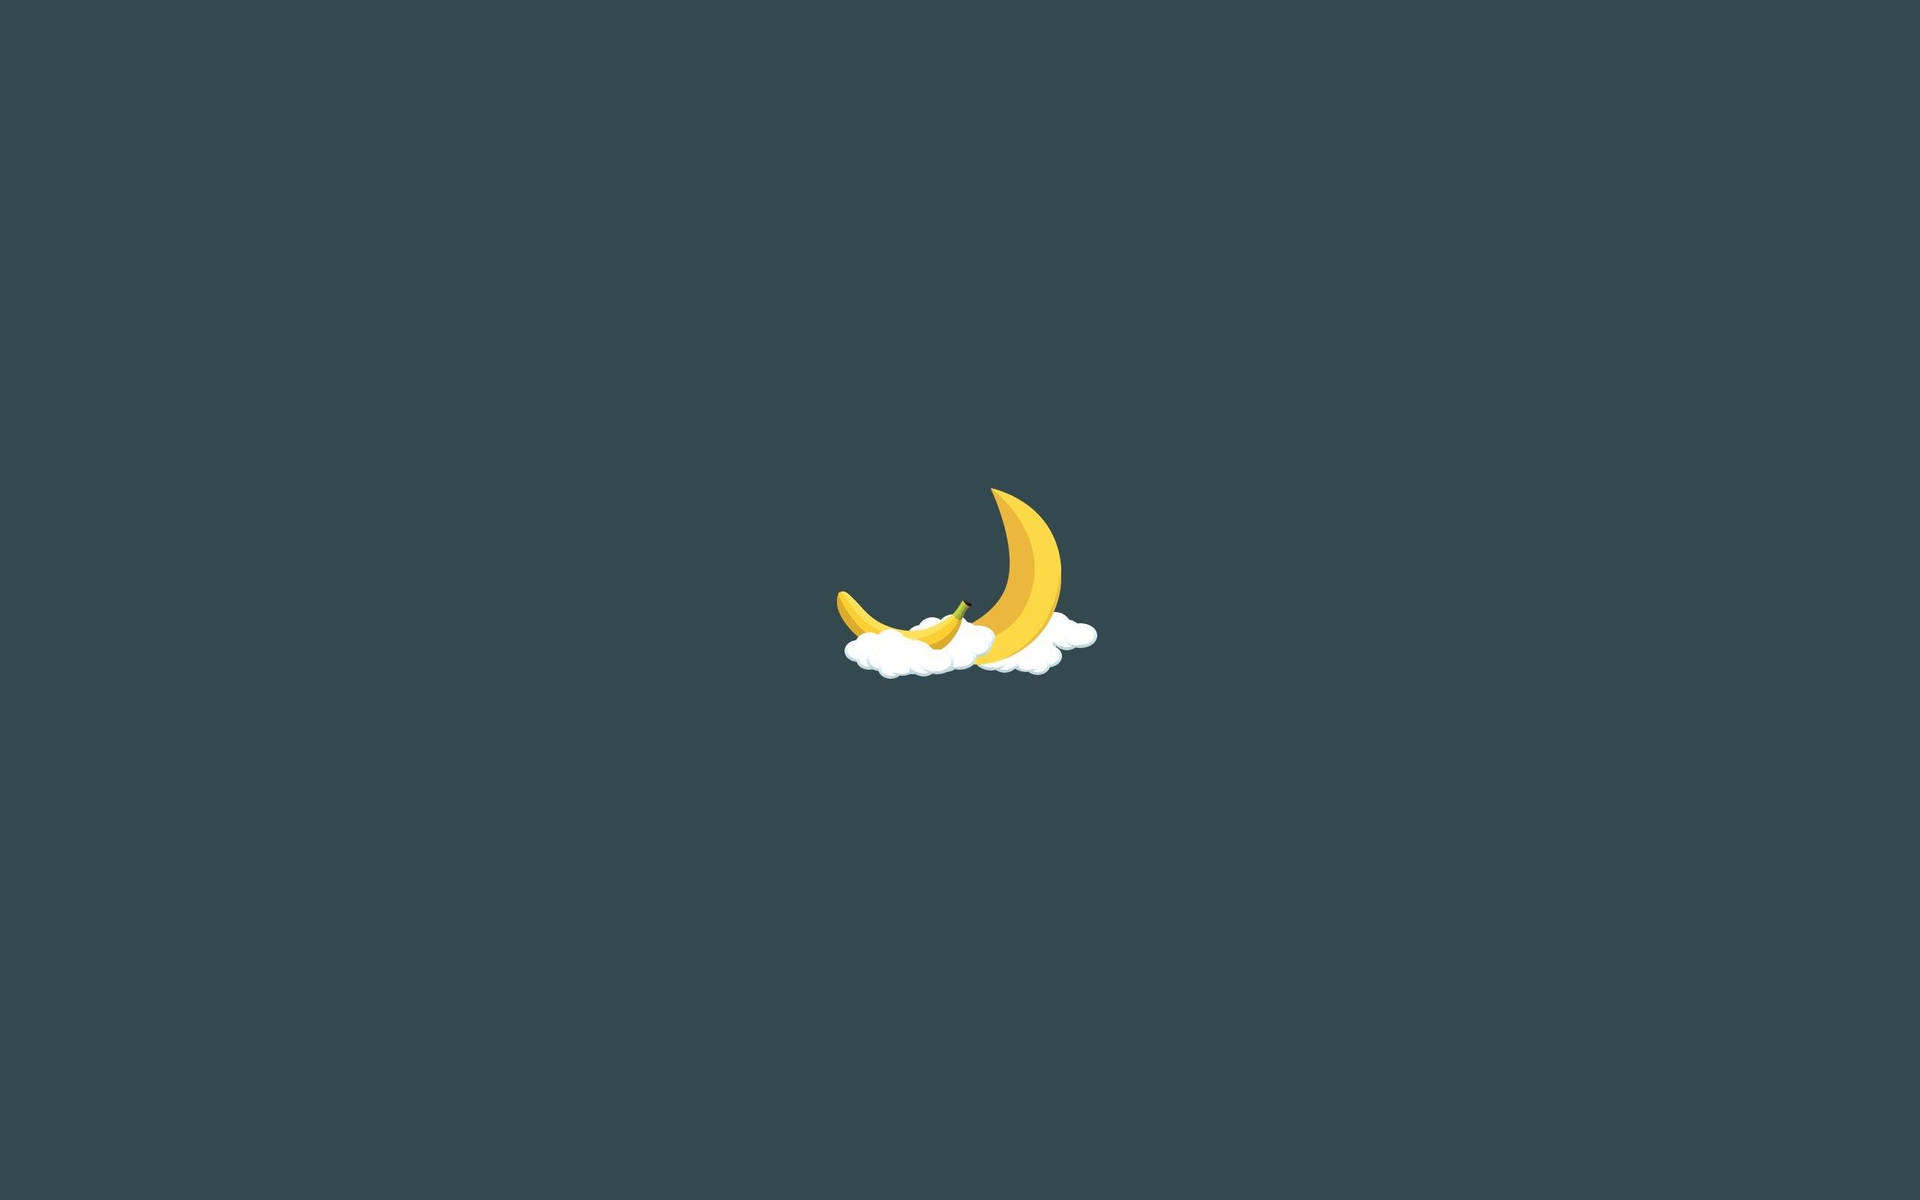 Cute Simple Aesthetic Desktop Banana Moon Wallpaper